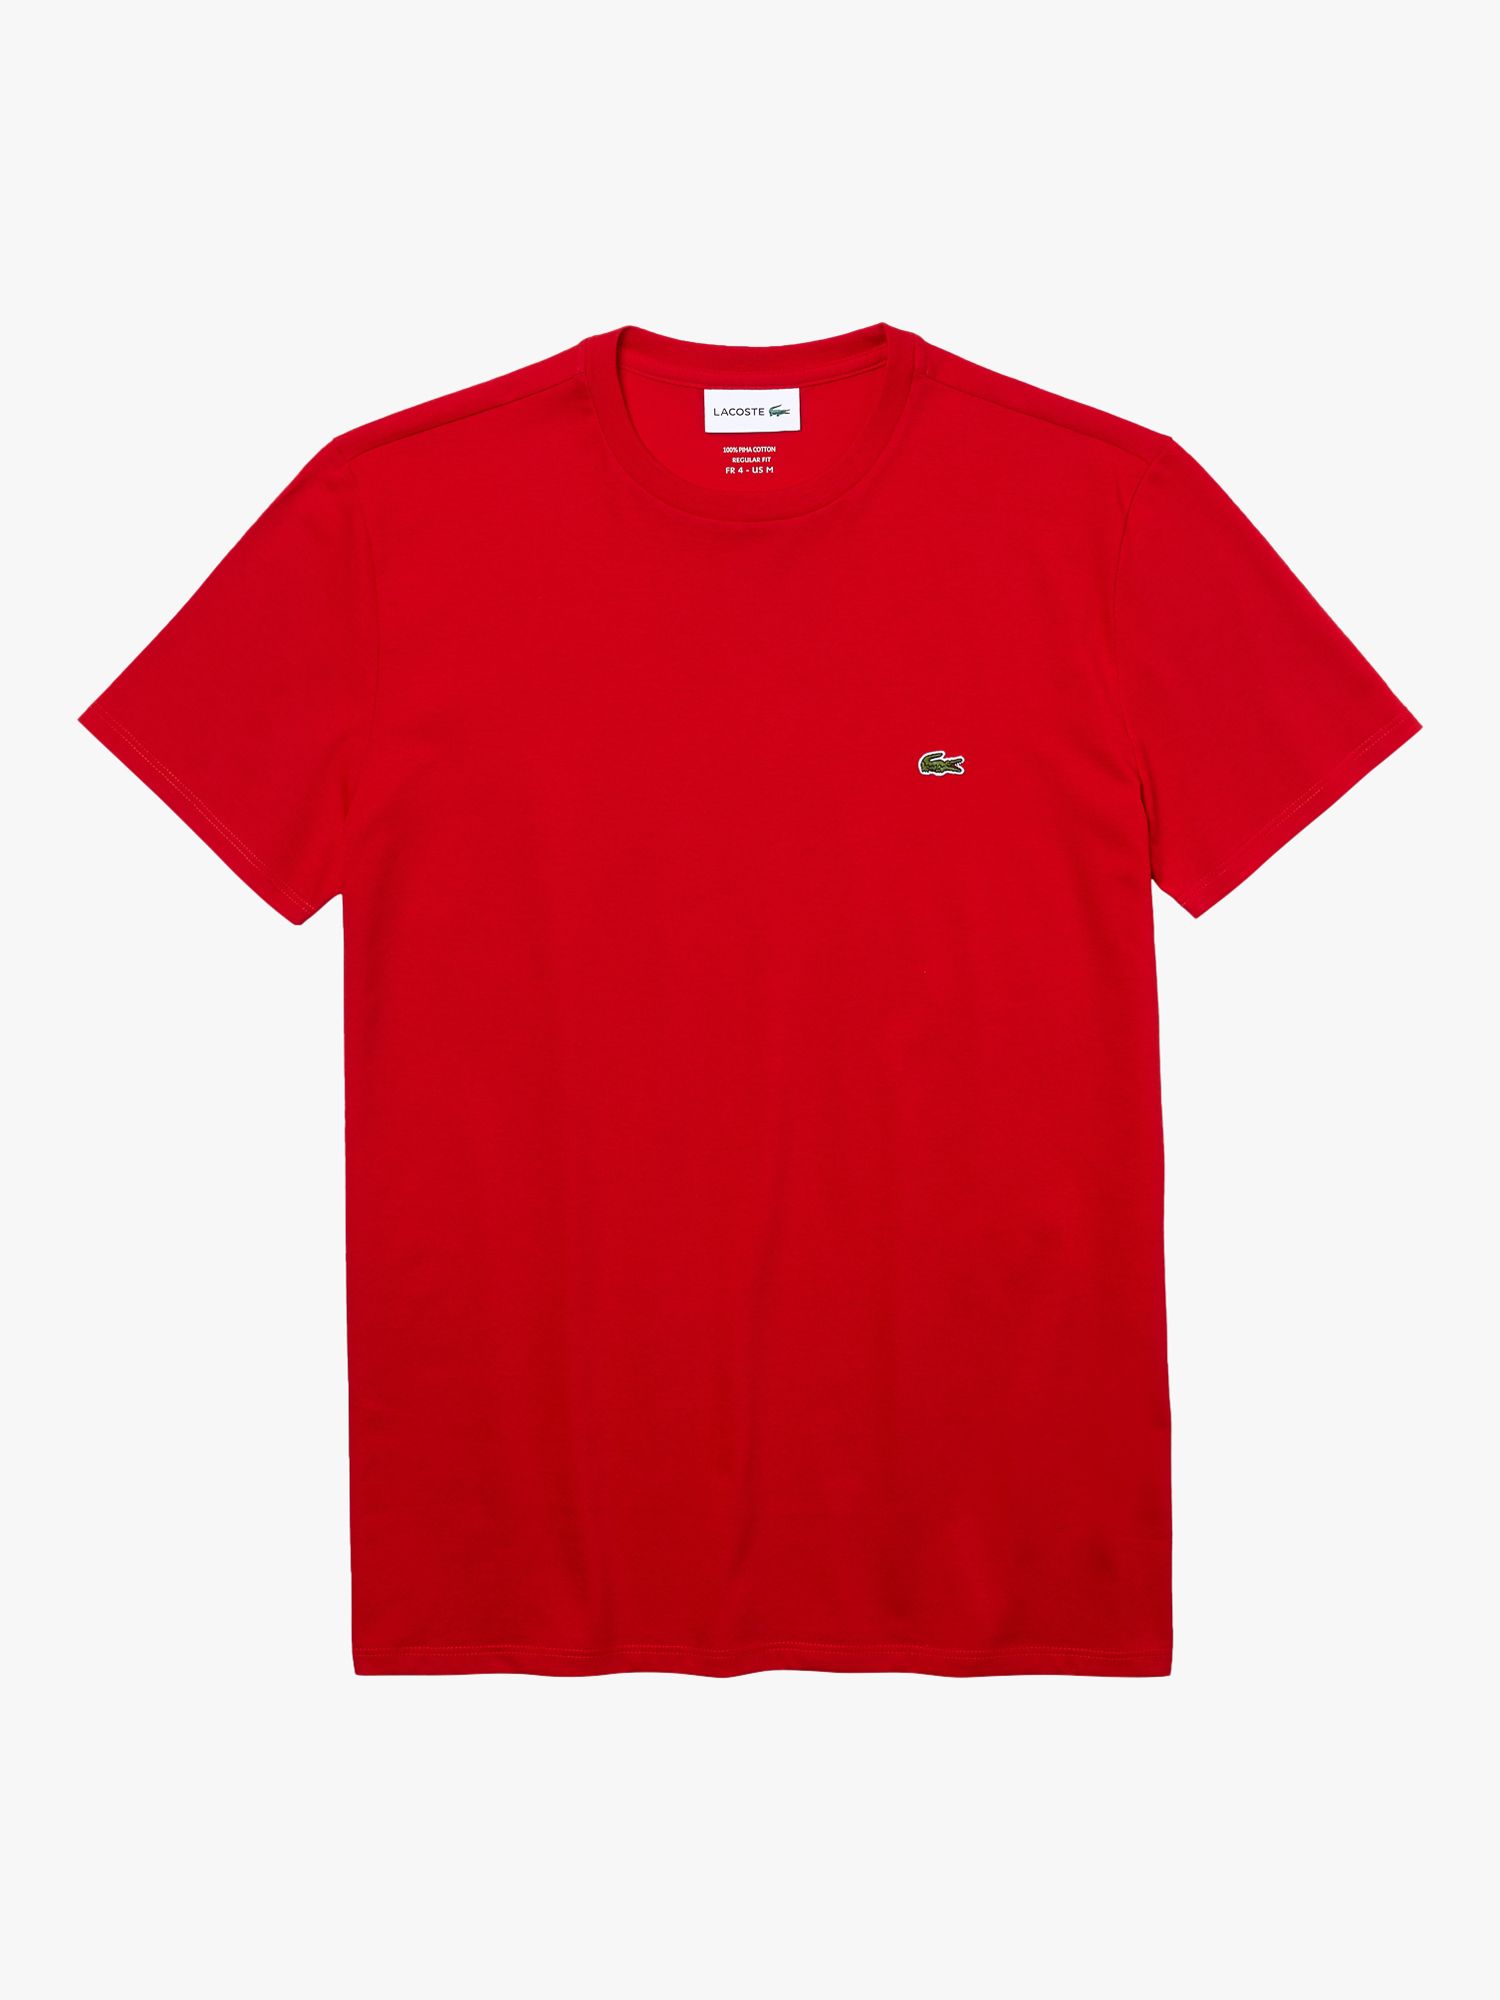 Lacoste Pima Crew Neck T-Shirt, Red, S